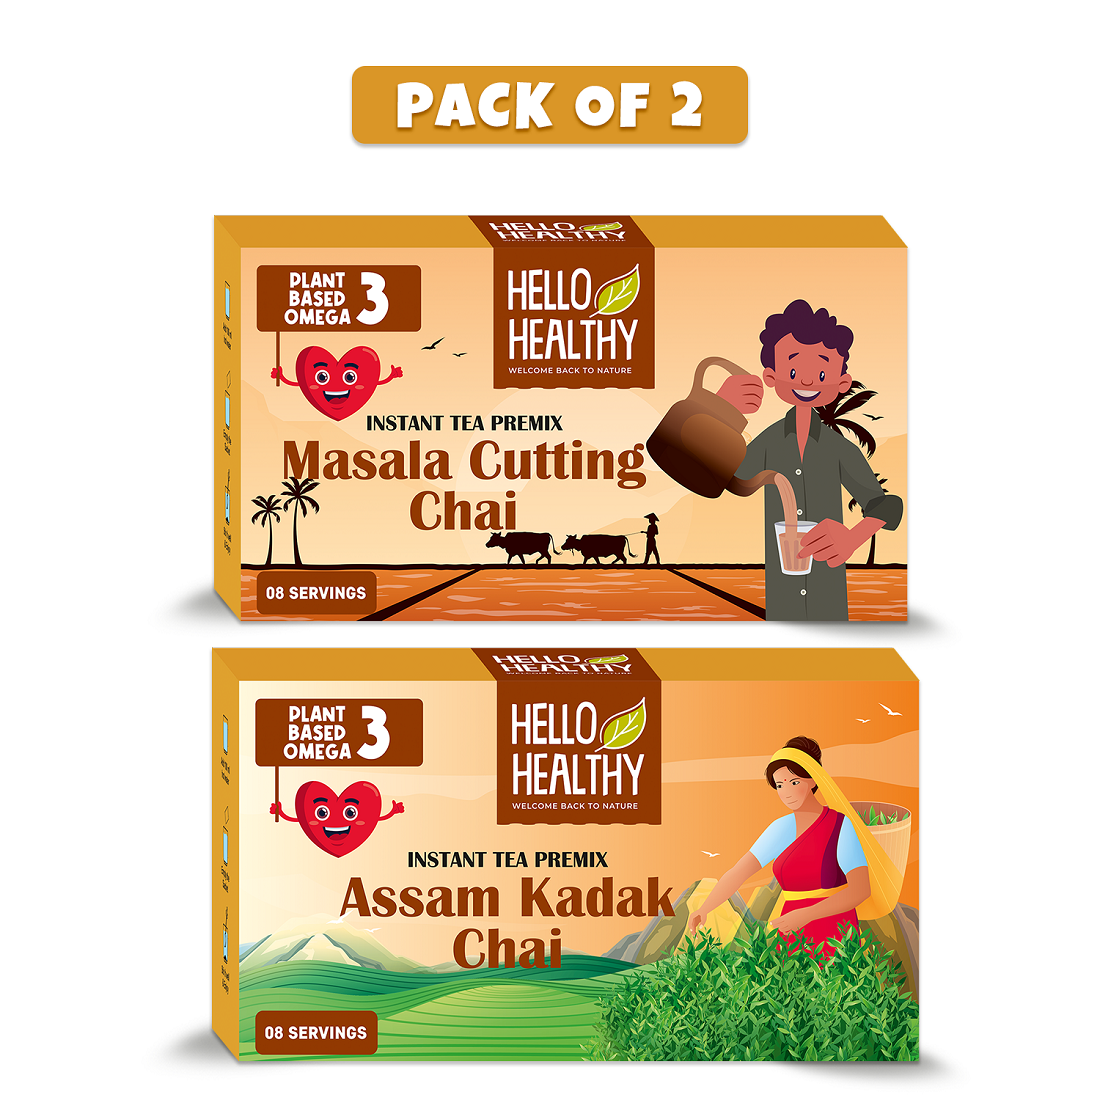 Hello Healthy Masala Cutting & Kadak Assam Chai Bold and Aromatic Flavours Get Authentic Taste Tulsi, Cardamom, Cinnamon, Ginger Black Tea Bags Box